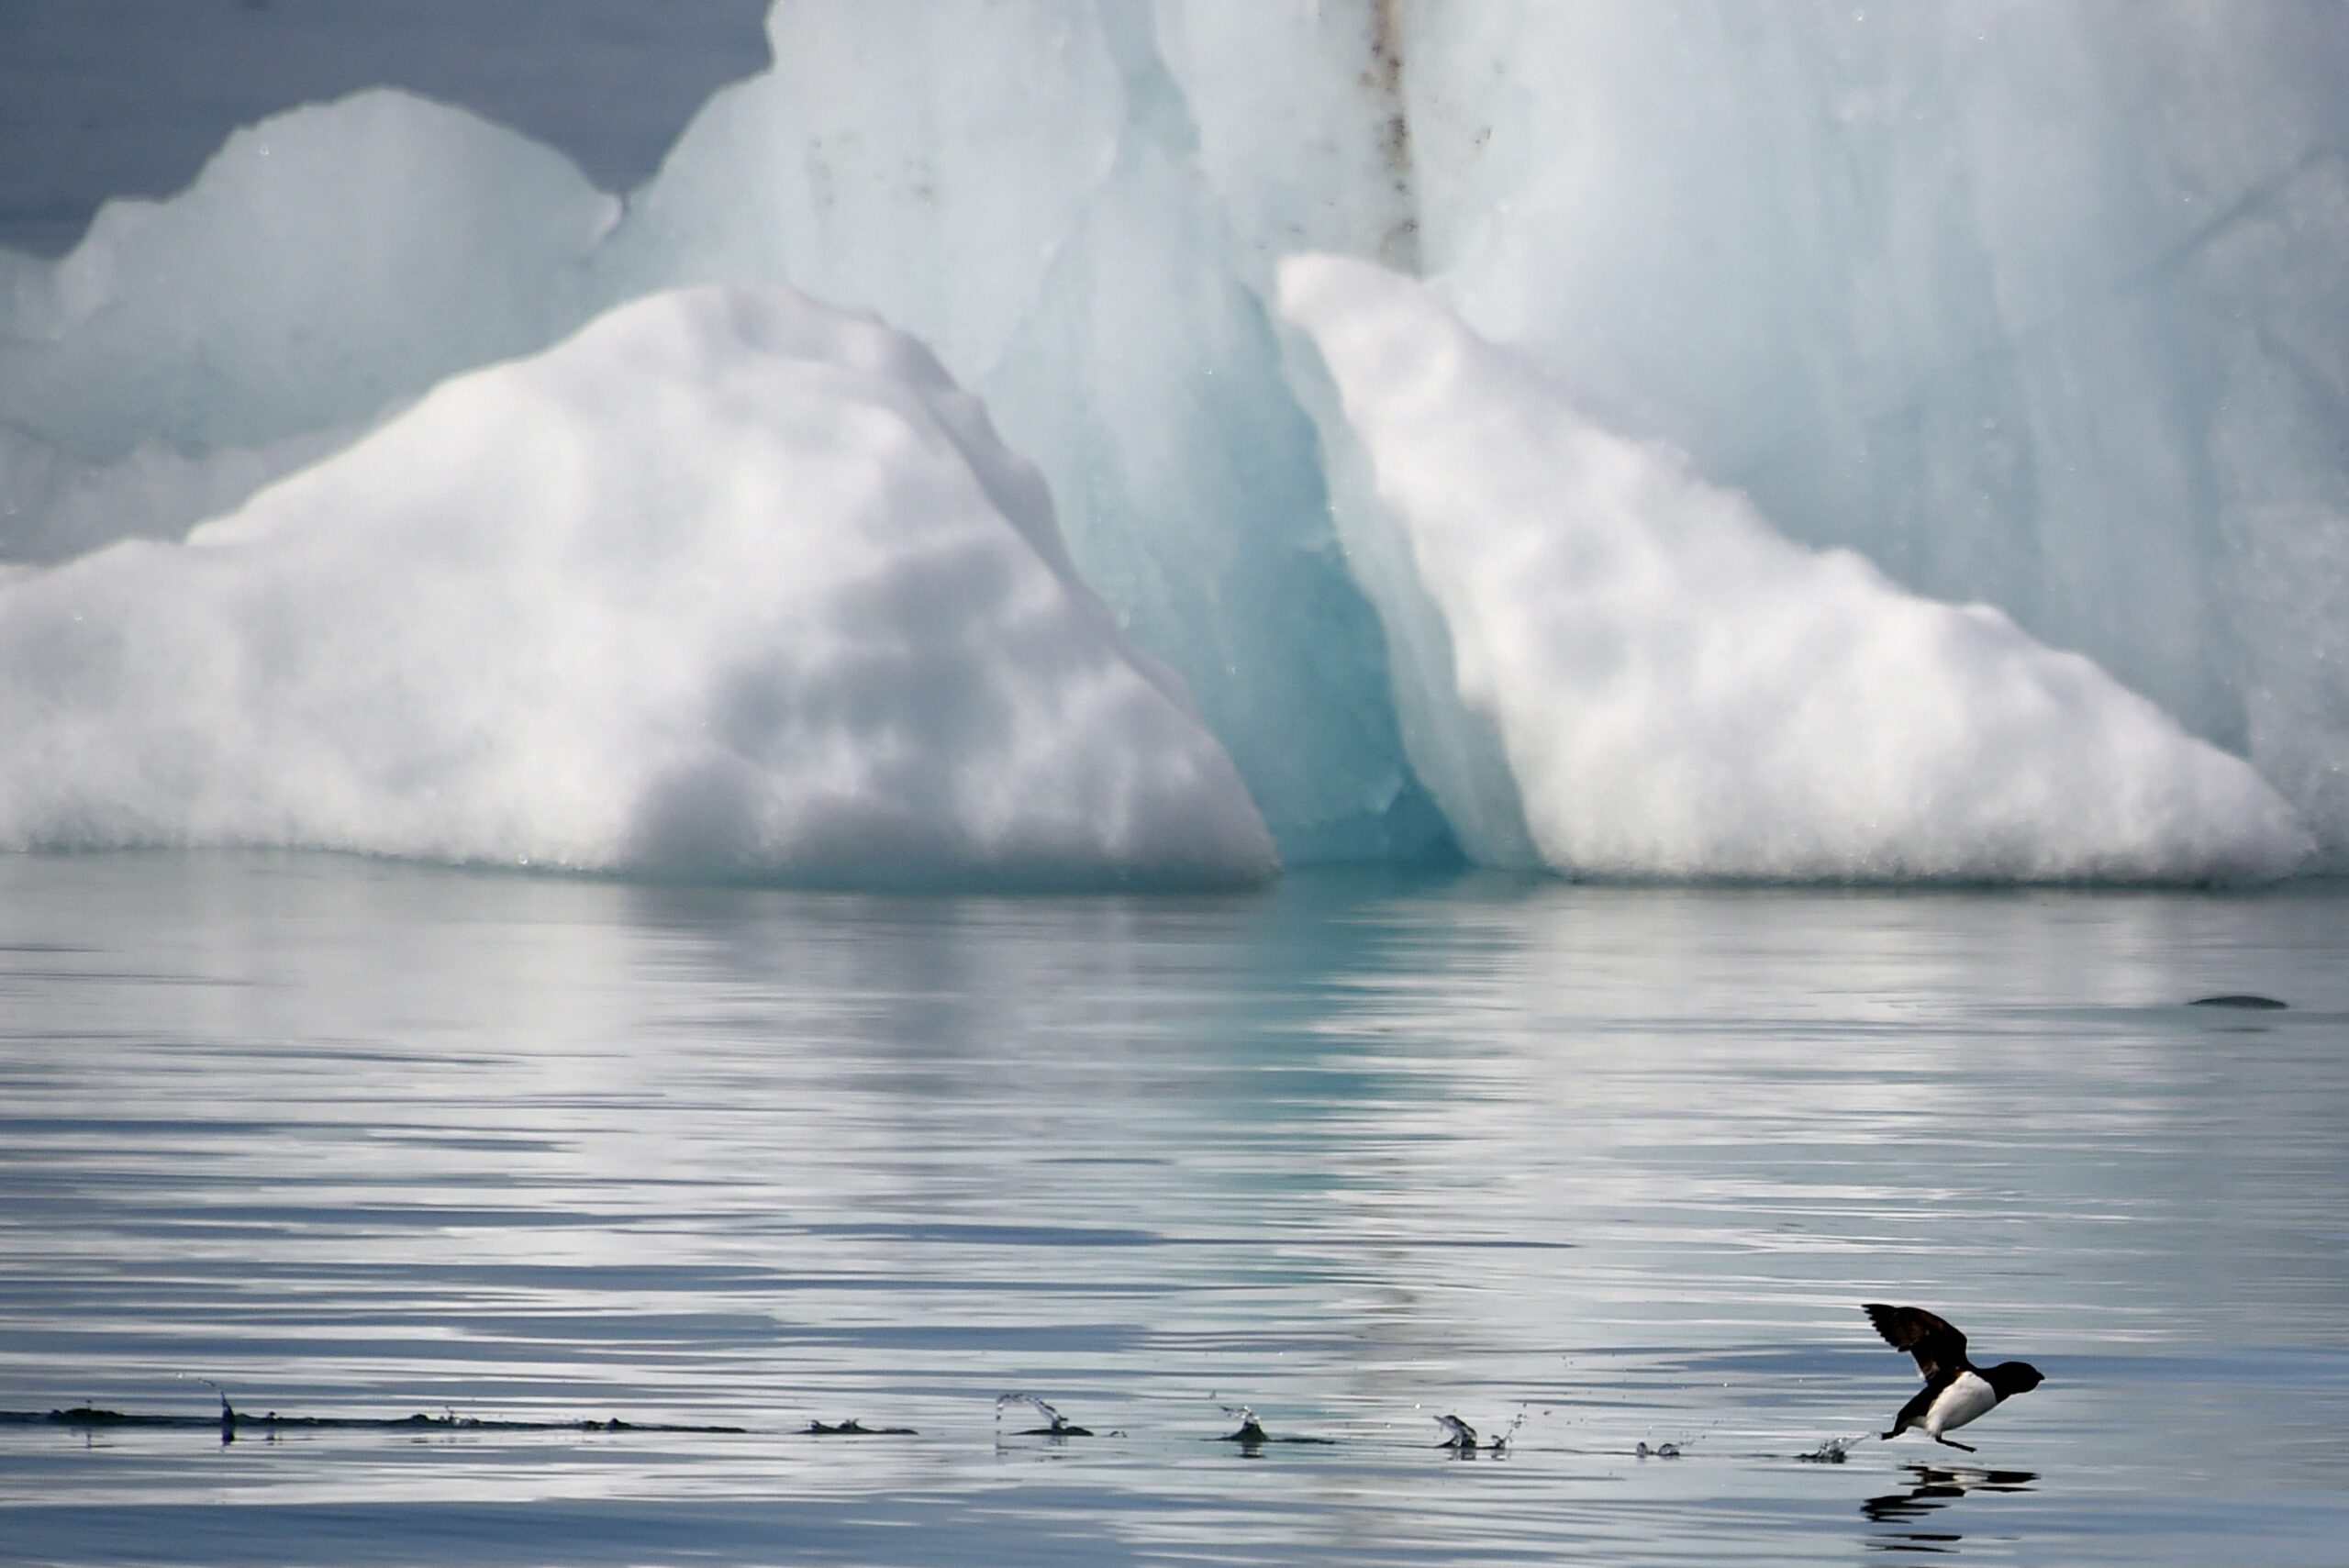 A little auk flies near the Kronebeene glacier in the Svalbard archipelago, in the Arctic Ocean.